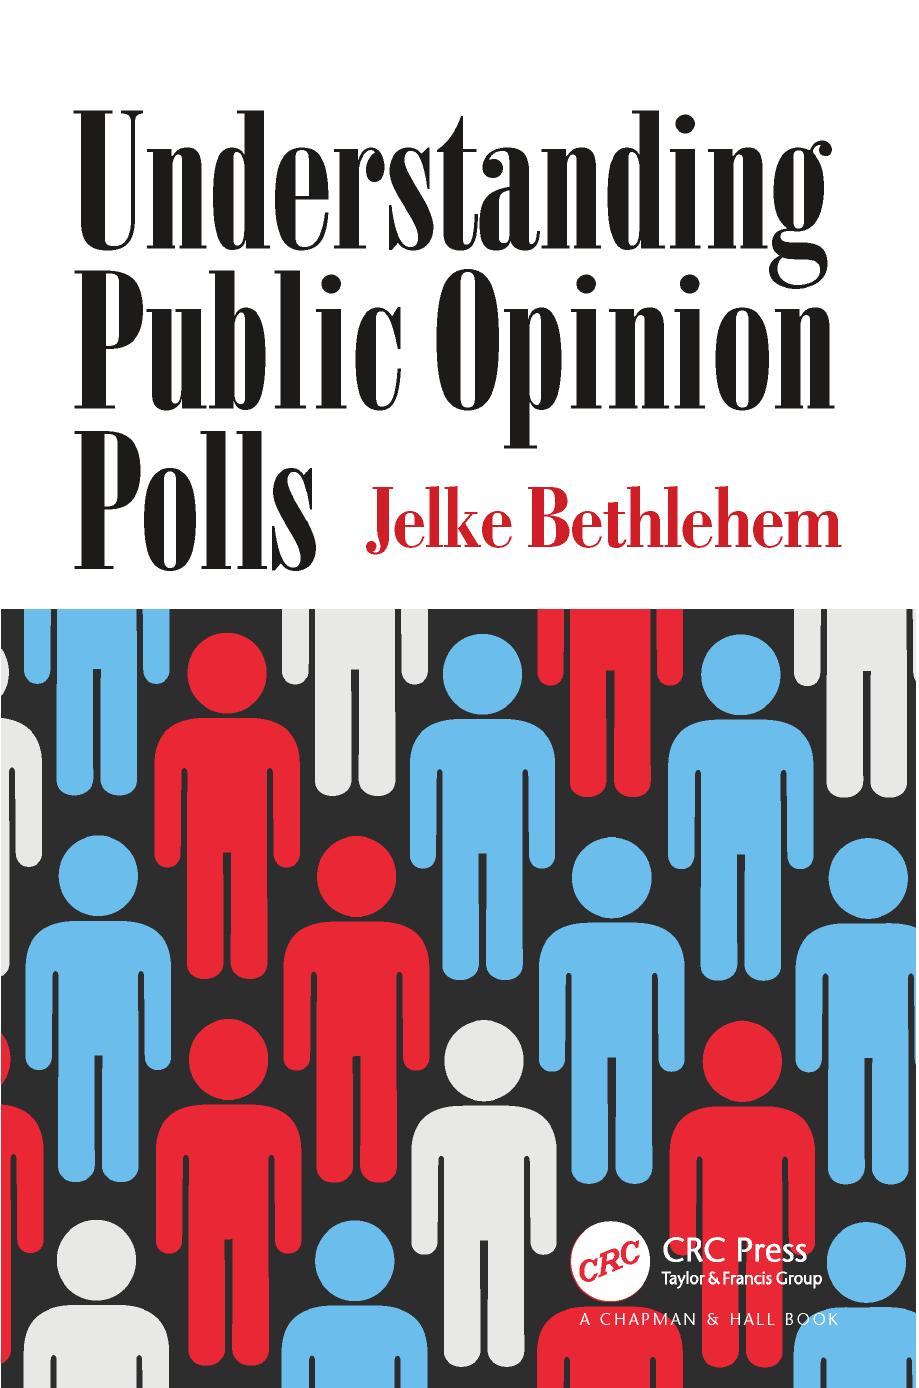 Understanding Public Opinion Polls - Jelke Bethlehem.jpg